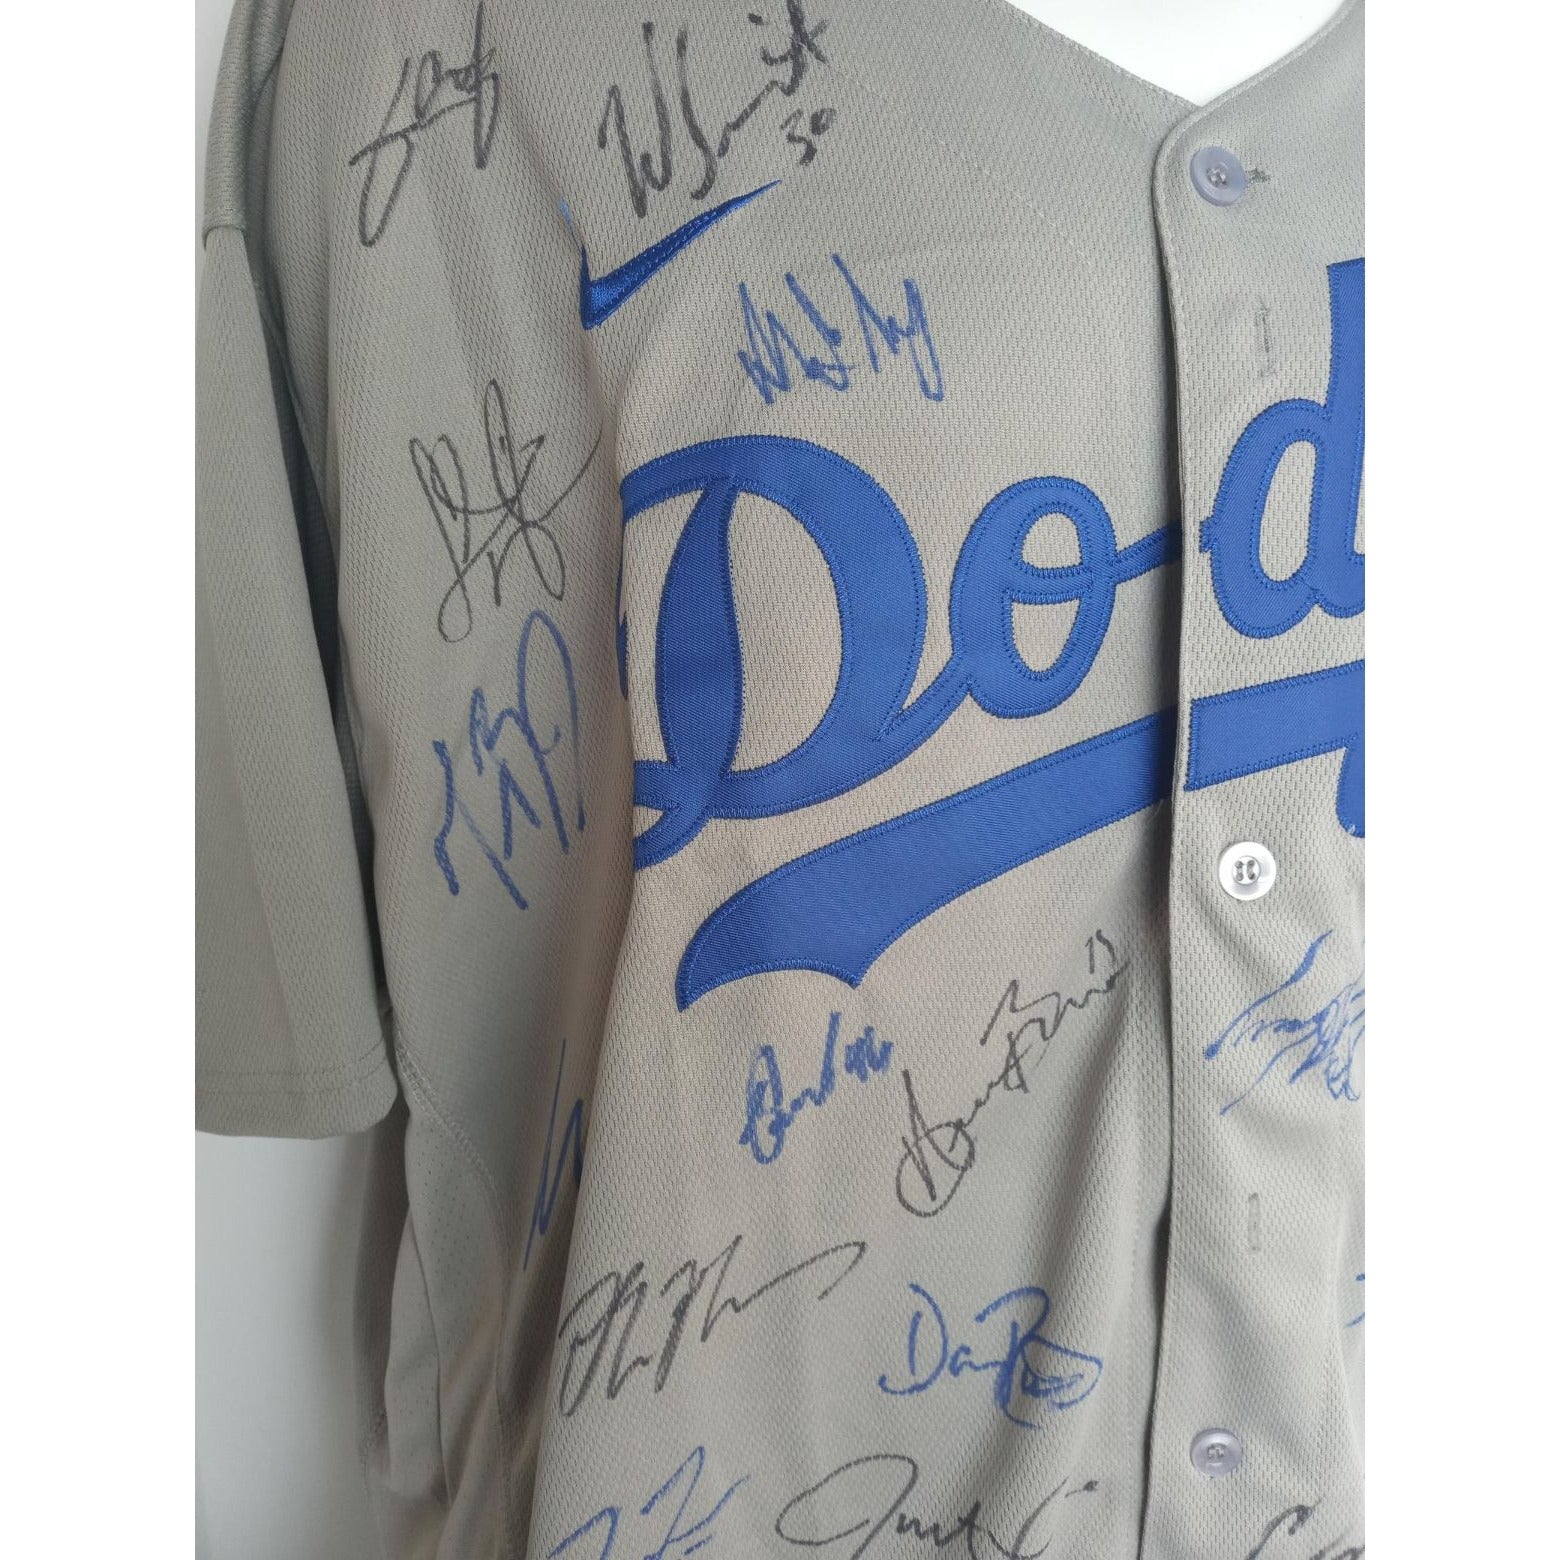 Buy Freddie Freeman Dodgers Shirt For Free Shipping CUSTOM XMAS PRODUCT  COMPANY